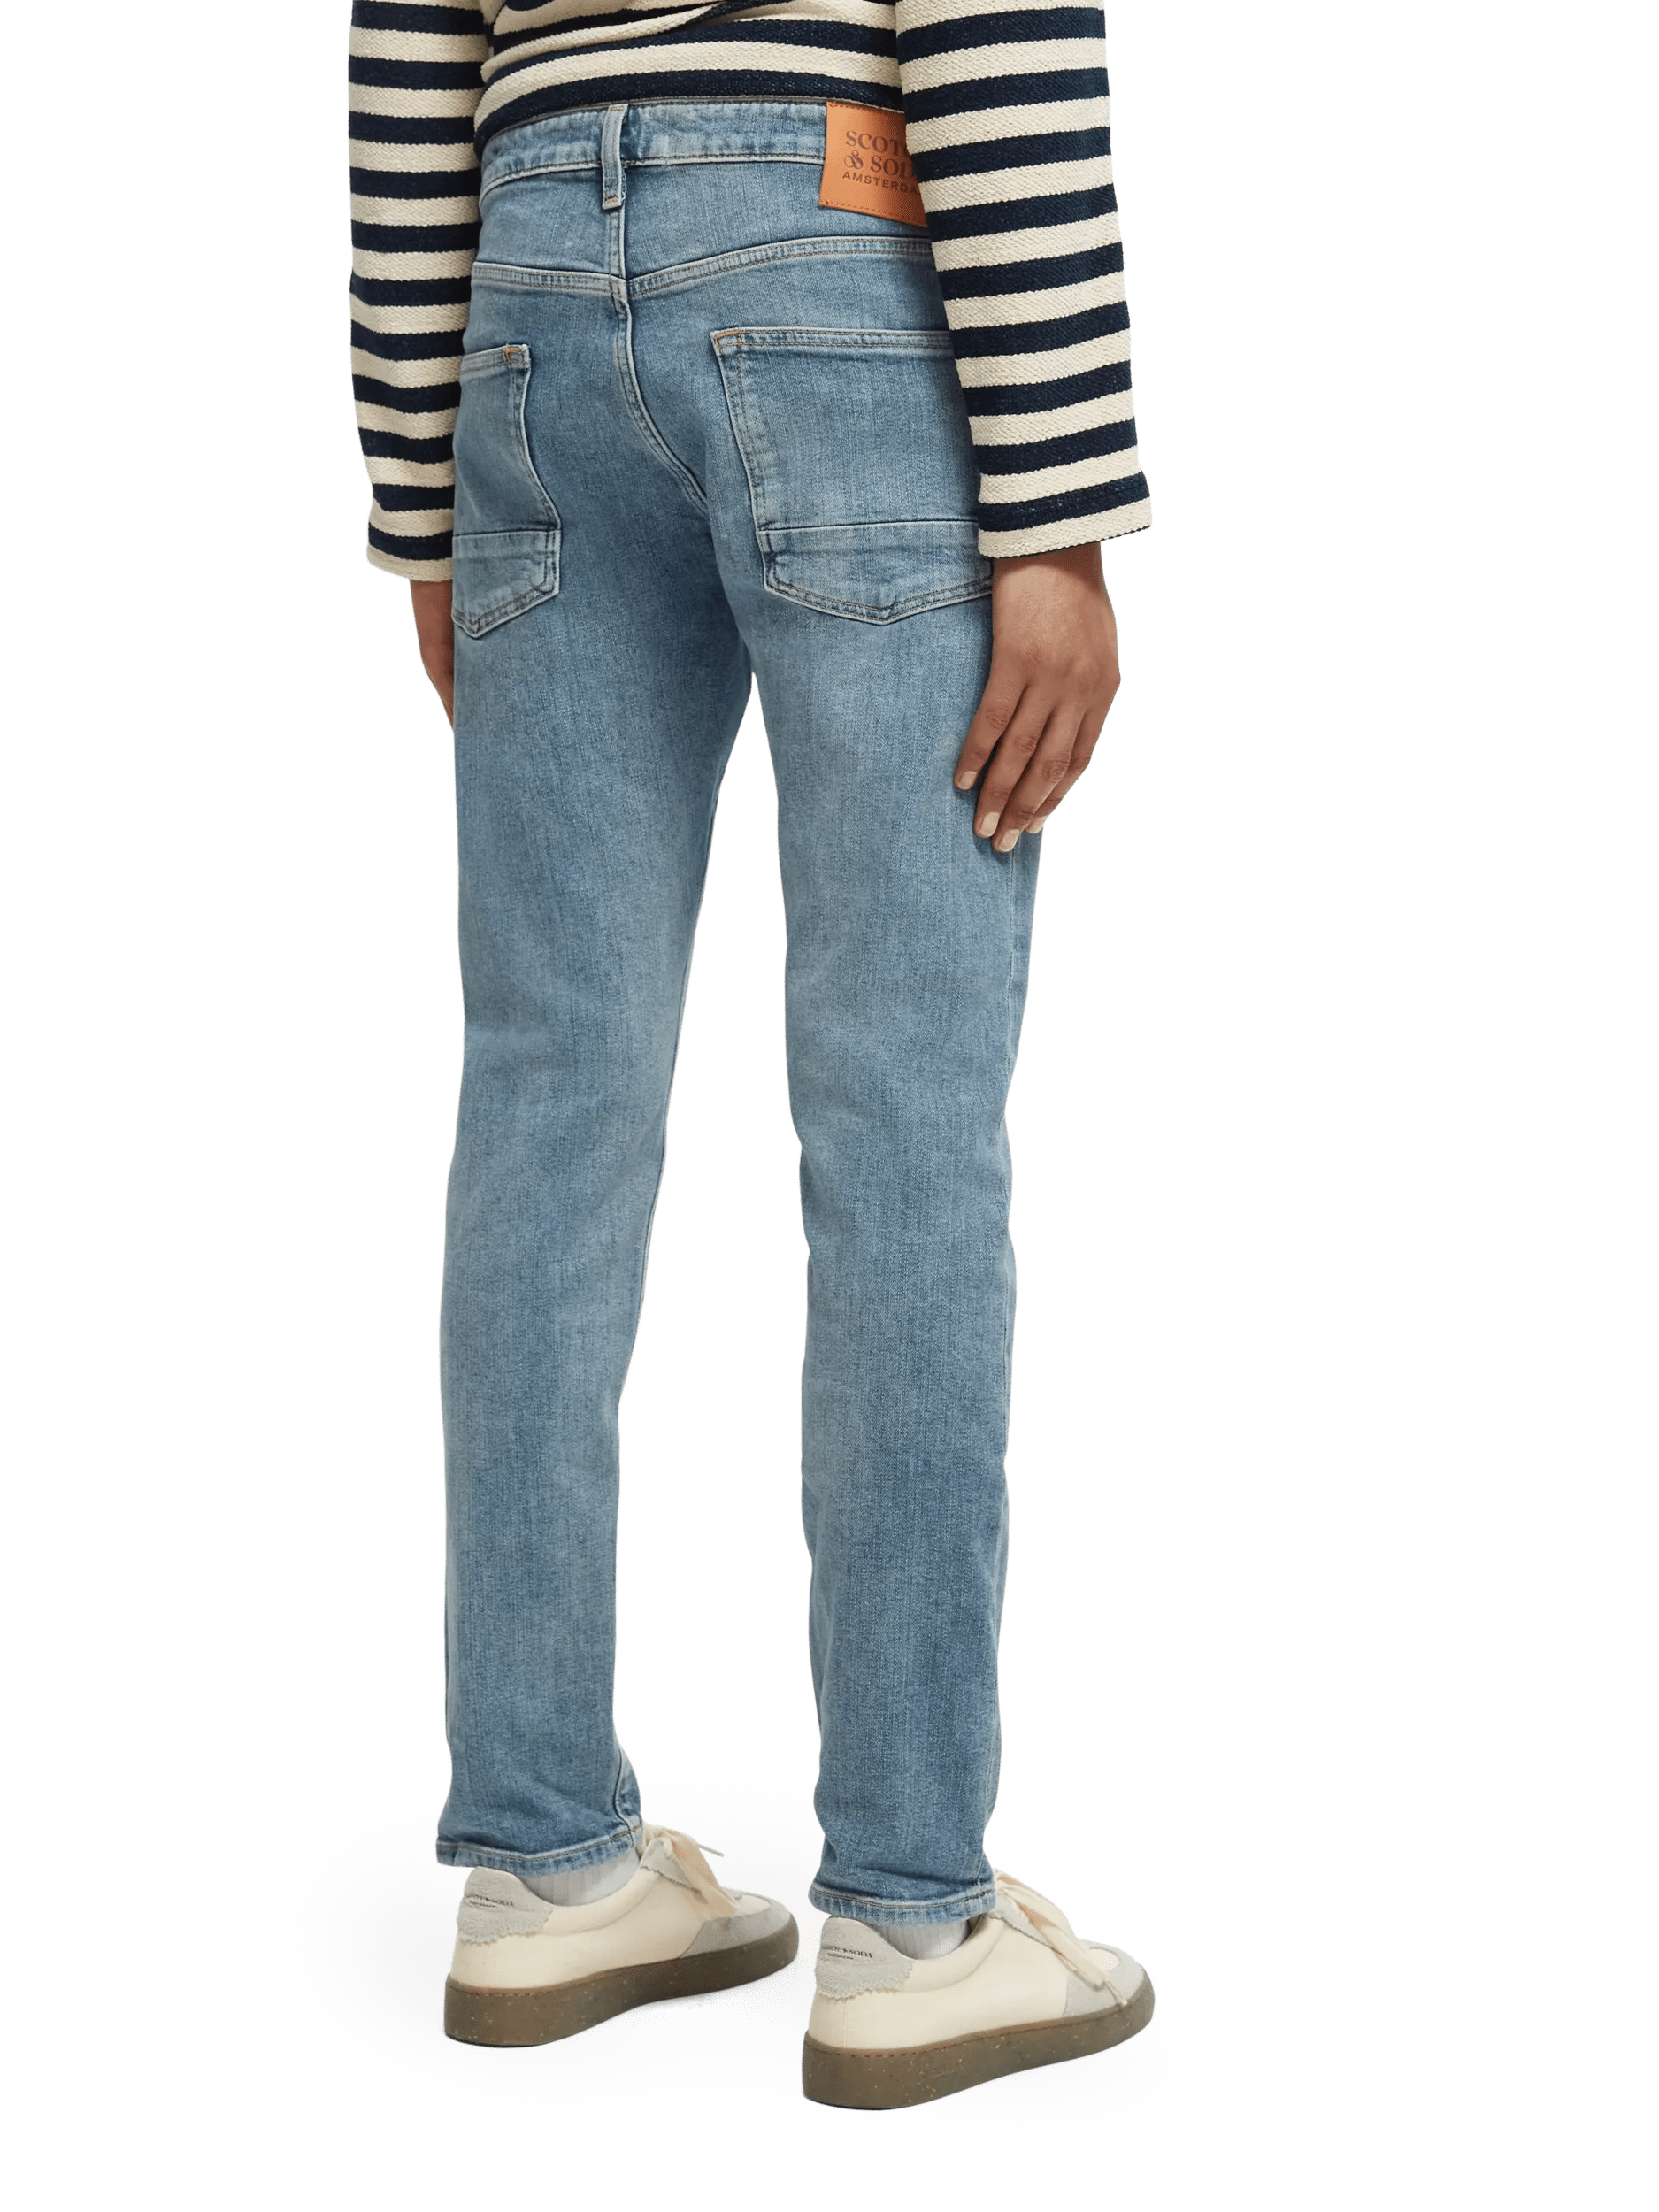 Scotch & Soda The Ralston Regular Slim Fit Jeans – Aqua Blue FIT-BCK